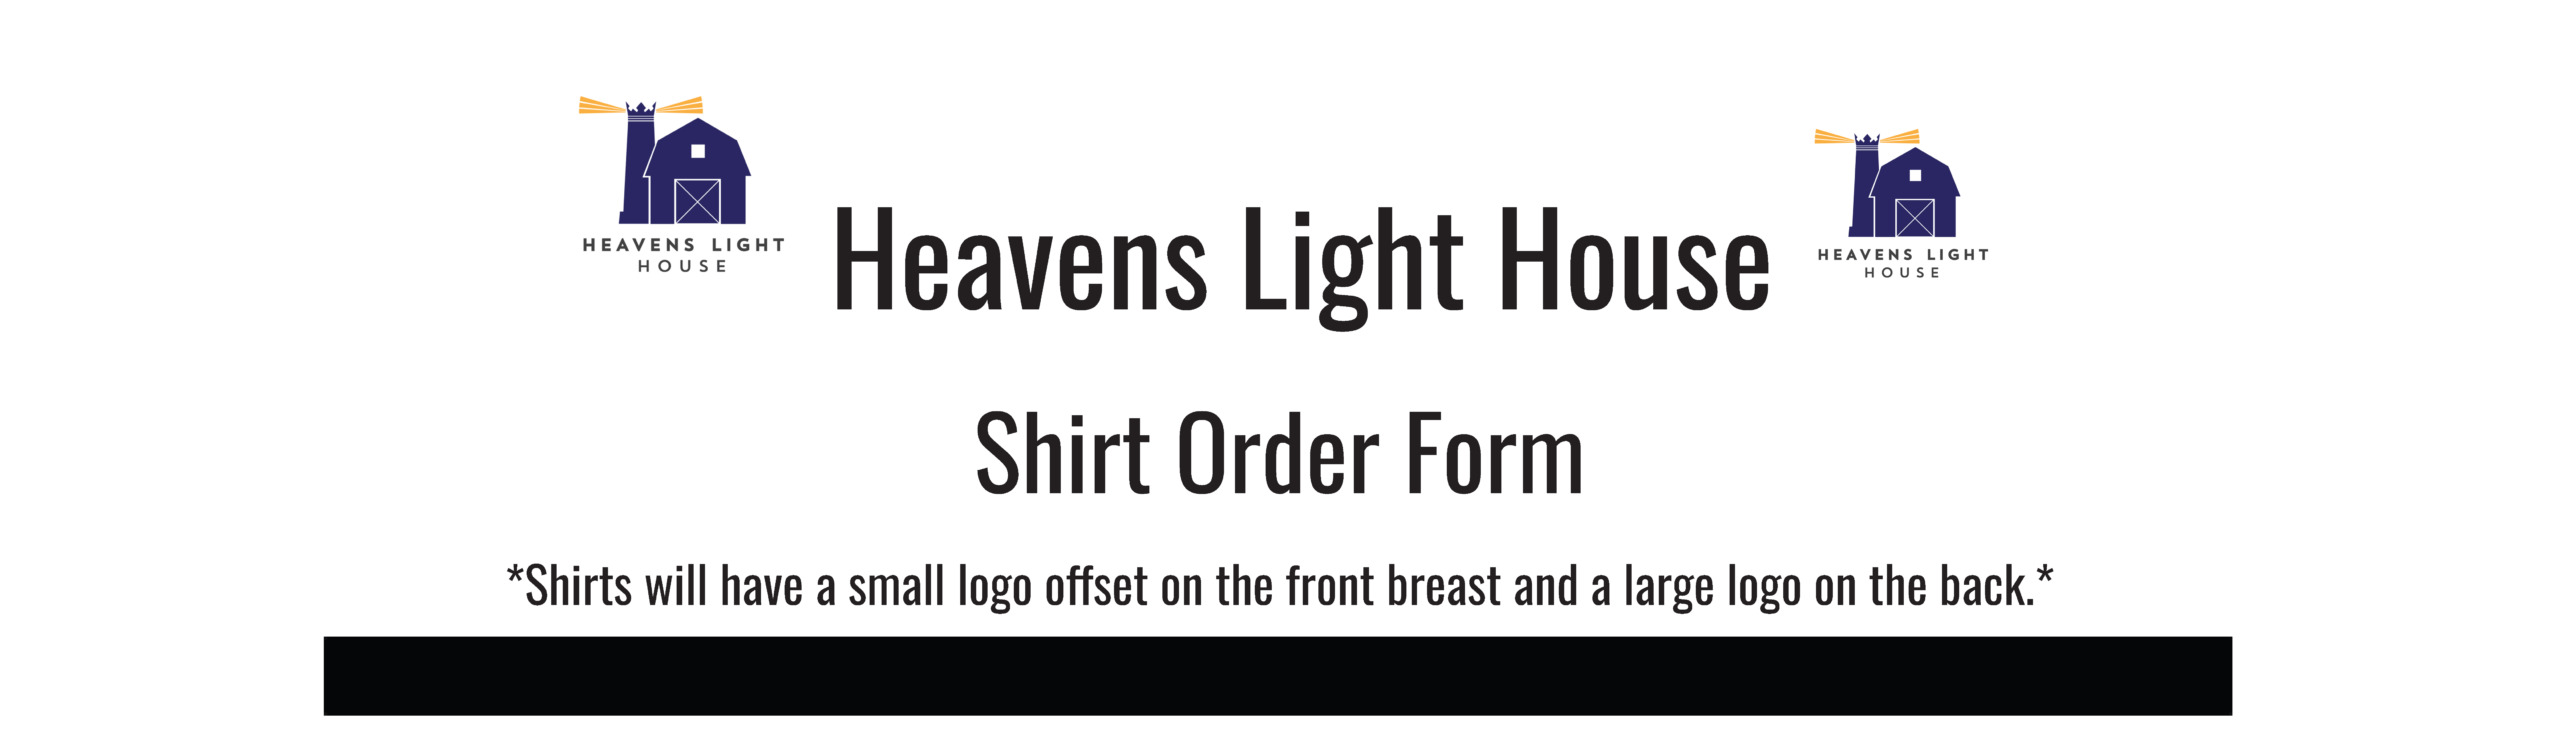 Heavens Light House Page 5 1 1top scaled - Heavens Light House Shirt Order Form